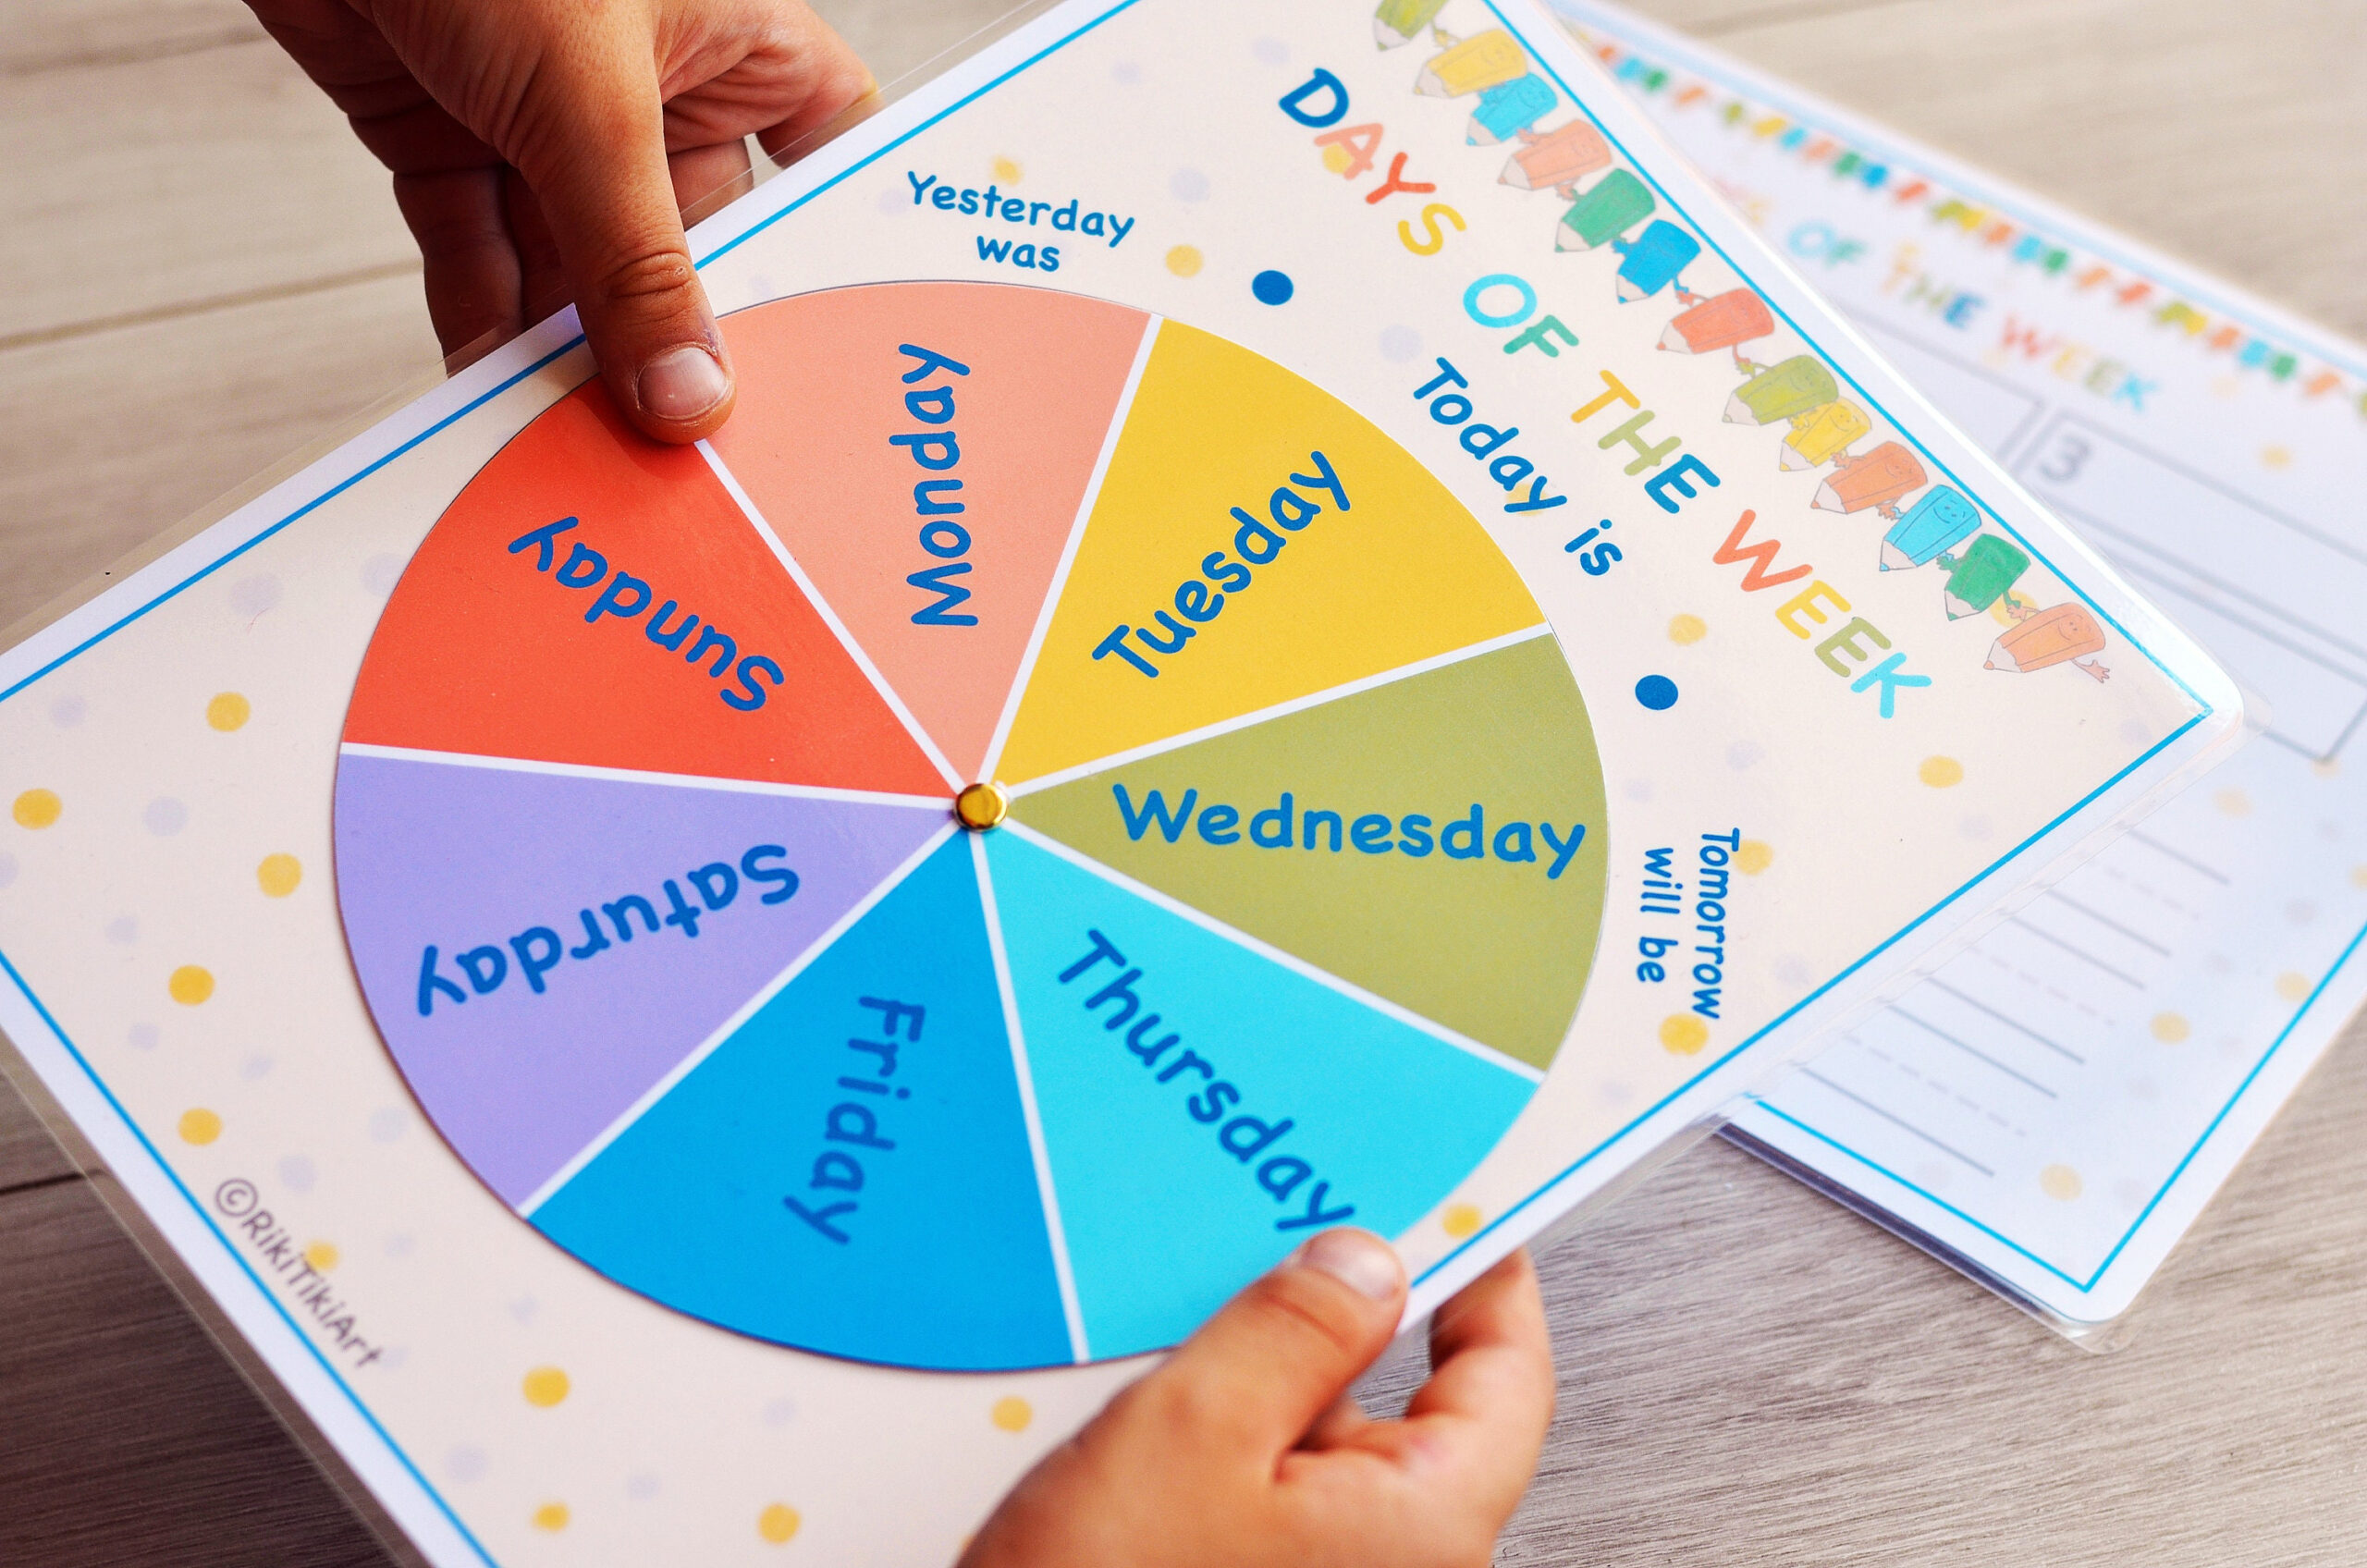 Days Of The Week Wheel Printable Montessori Calendar